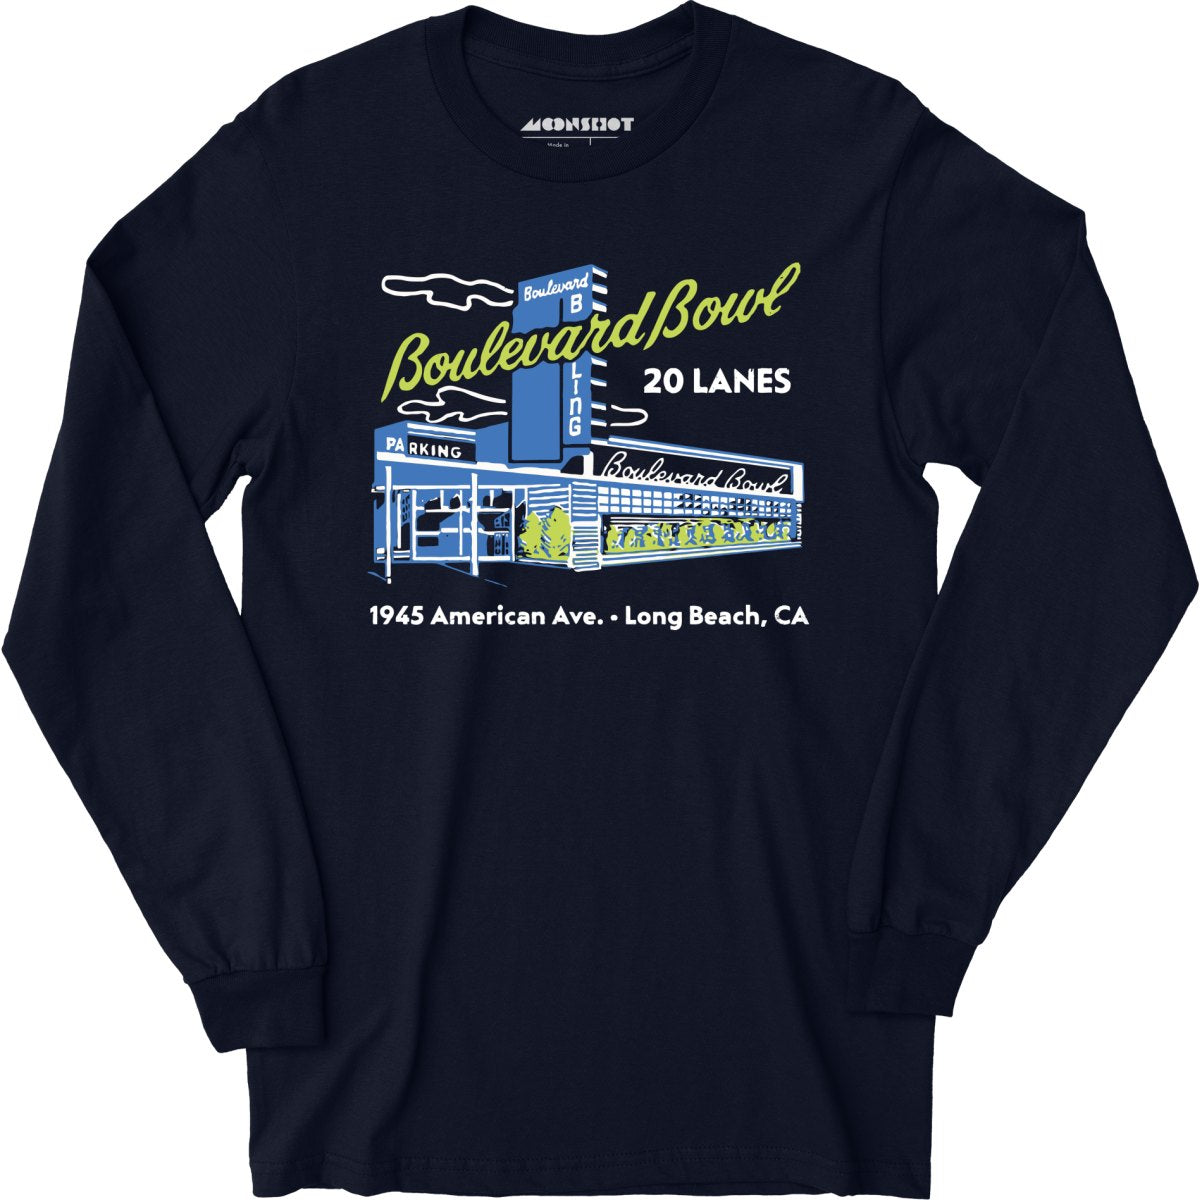 Boulevard Bowl - Long Beach, CA - Vintage Bowling Alley - Long Sleeve T-Shirt